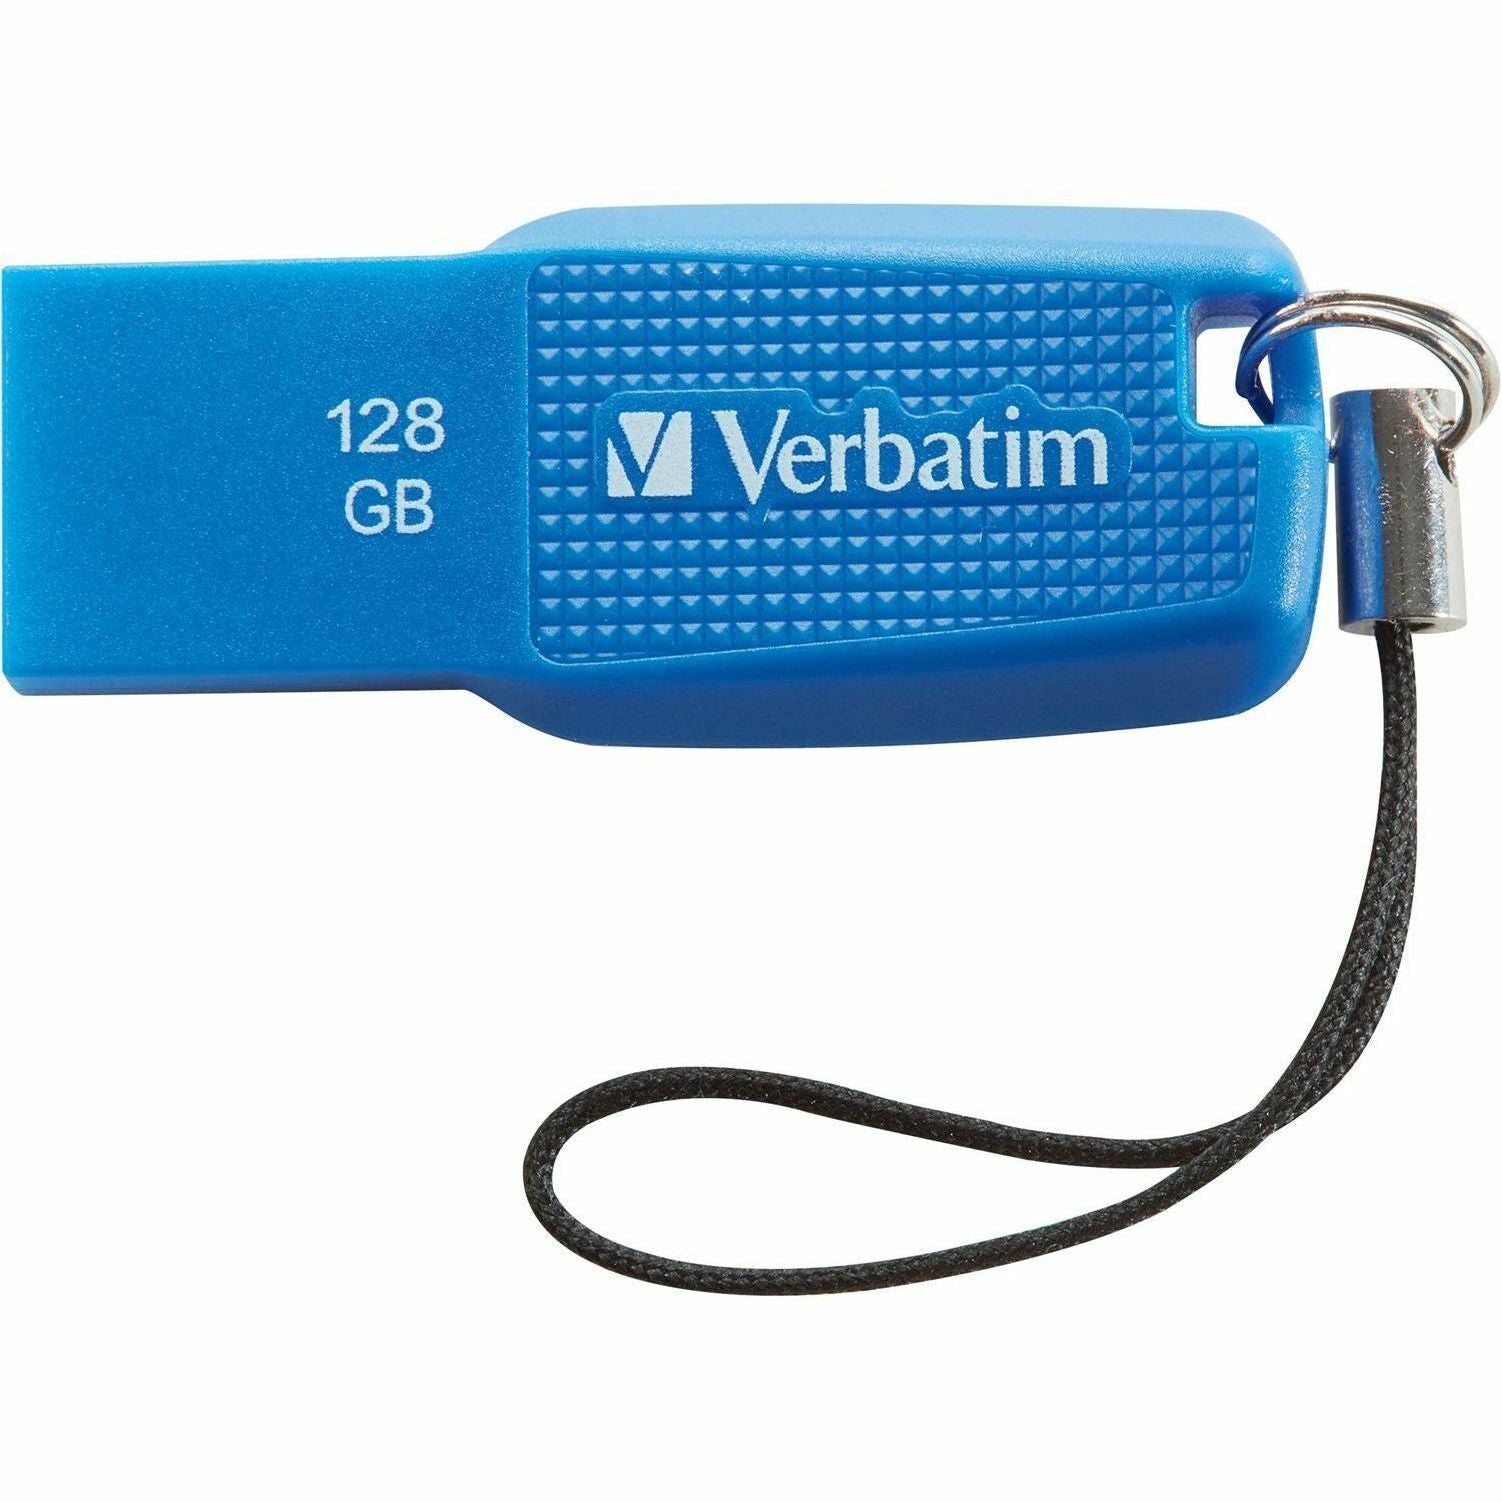 verbatim-128gb-ergo-usb-30-flash-drive-blue-the-verbatim-ergo-usb-drive-features-an-ergonomic-design-for-in-hand-comfort-and-cob-design-for-enhanced-reliability_ver70880 - 3